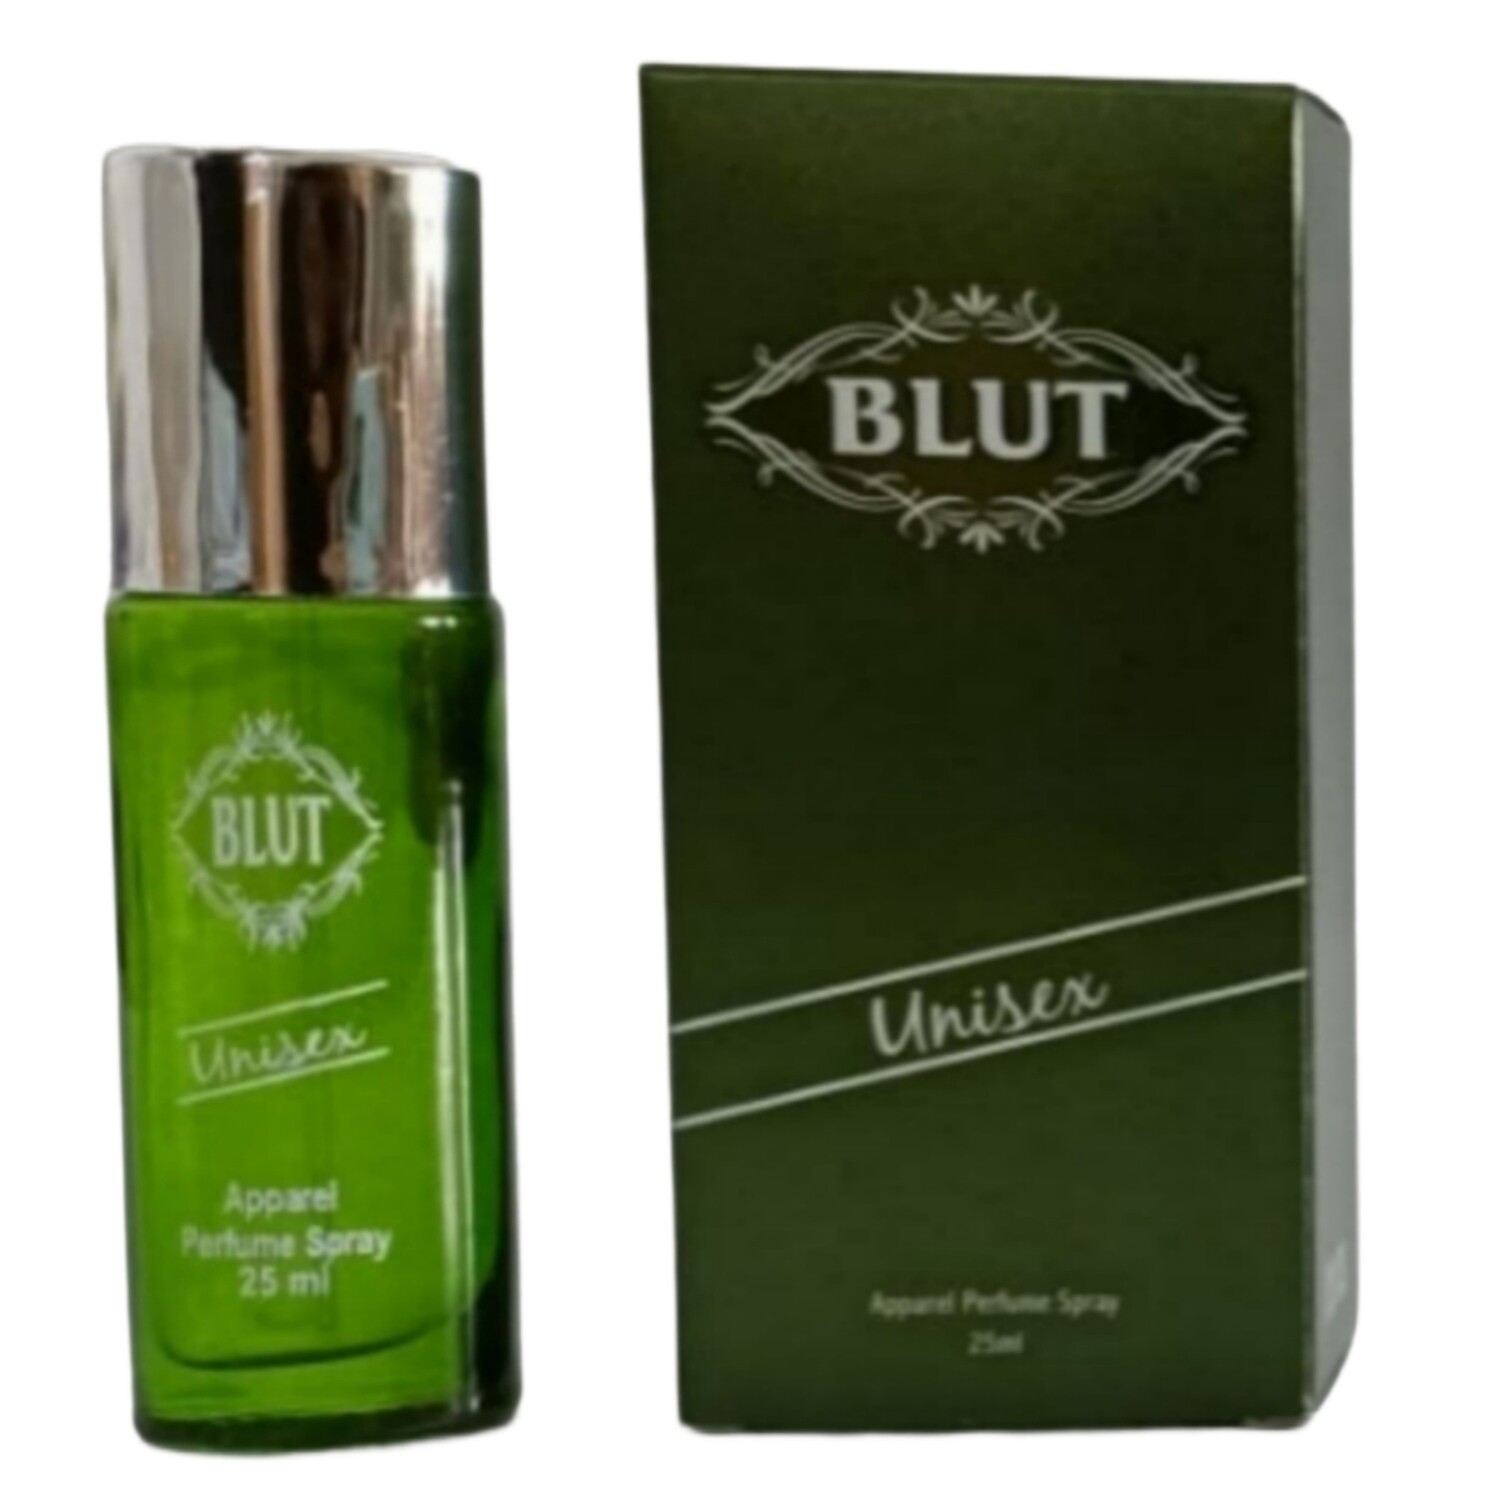 SAV BLUT Apparel Perfume Spray 25 ml